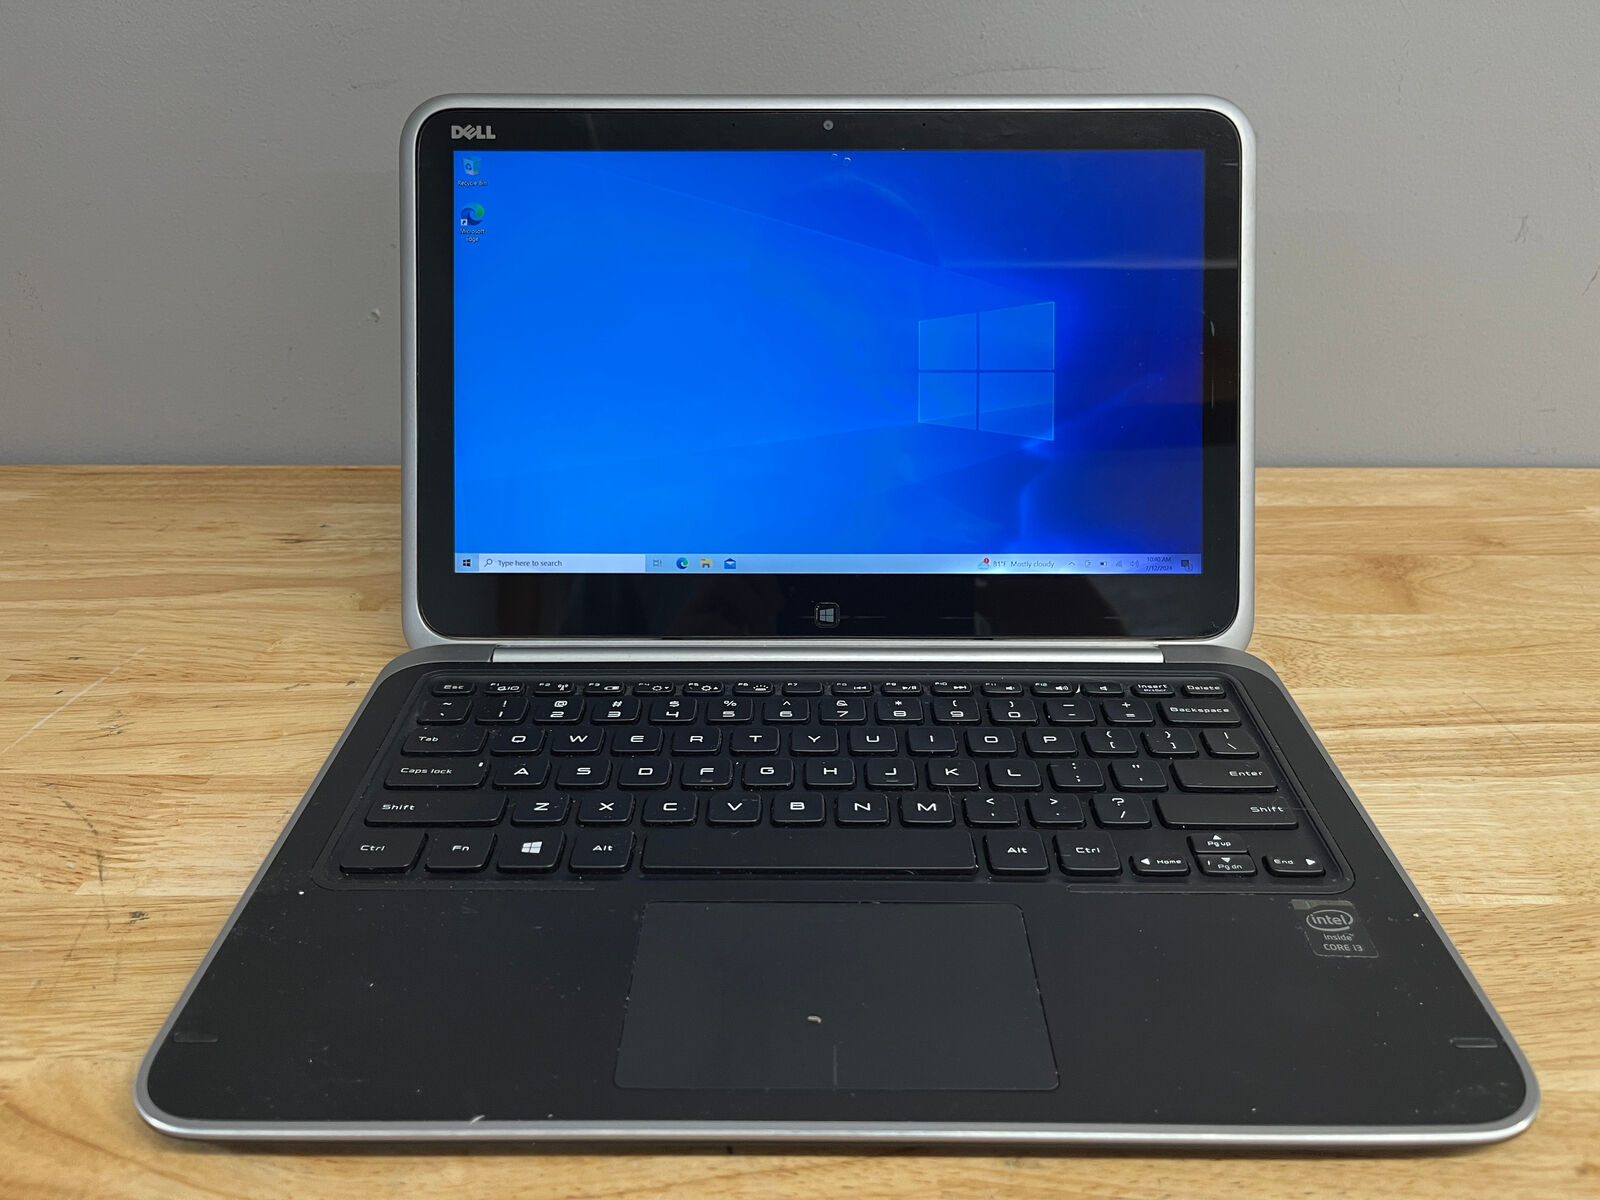 Dell XPS 12-9Q33 12.5” TOUCHSCREEN Laptop Intel Core i3, 128GB SSD, 4GB RAM, W10